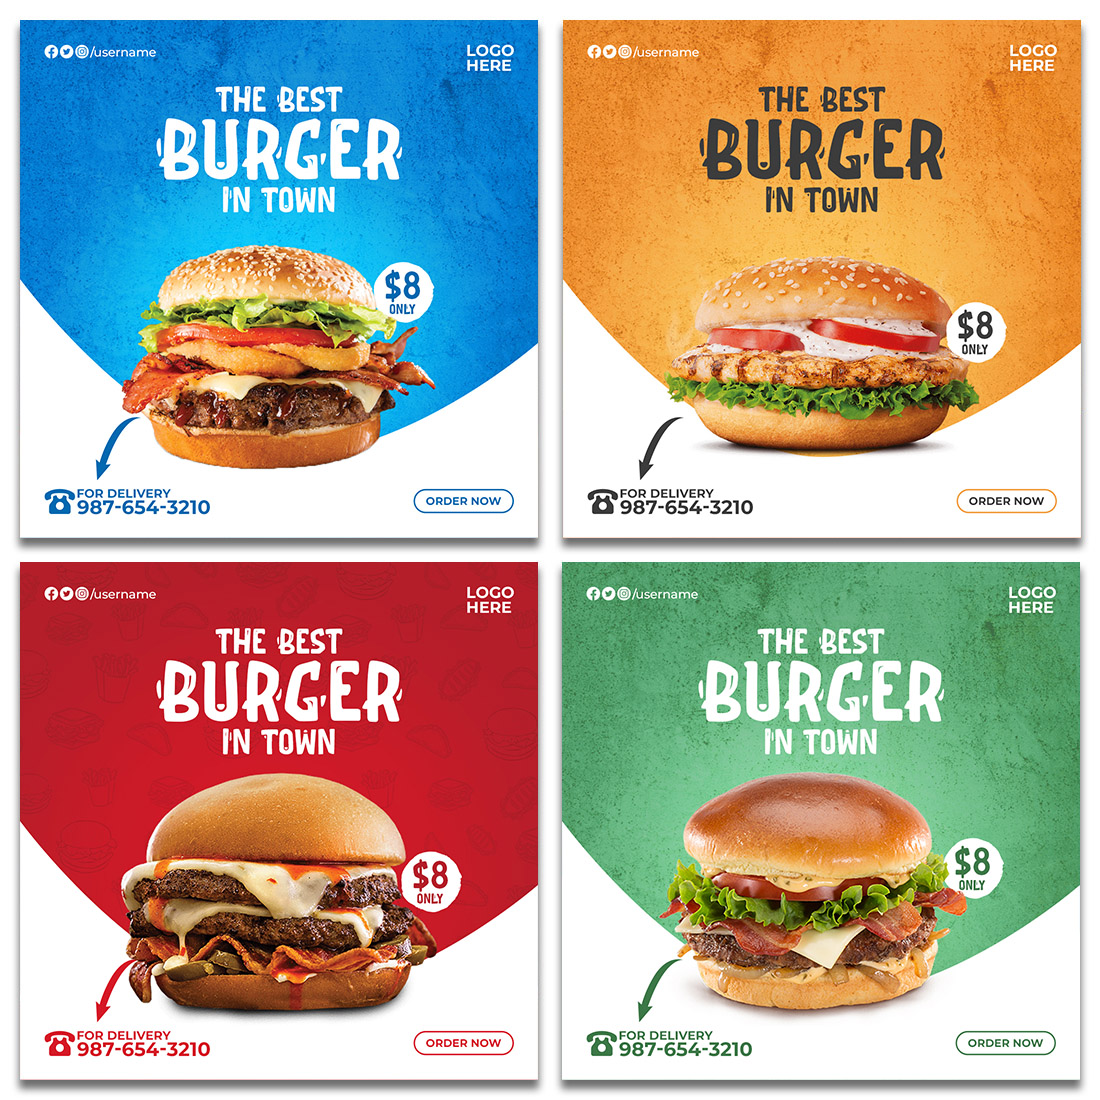 4 Best Burger Restaurant Social Media Banner Templates cover image.